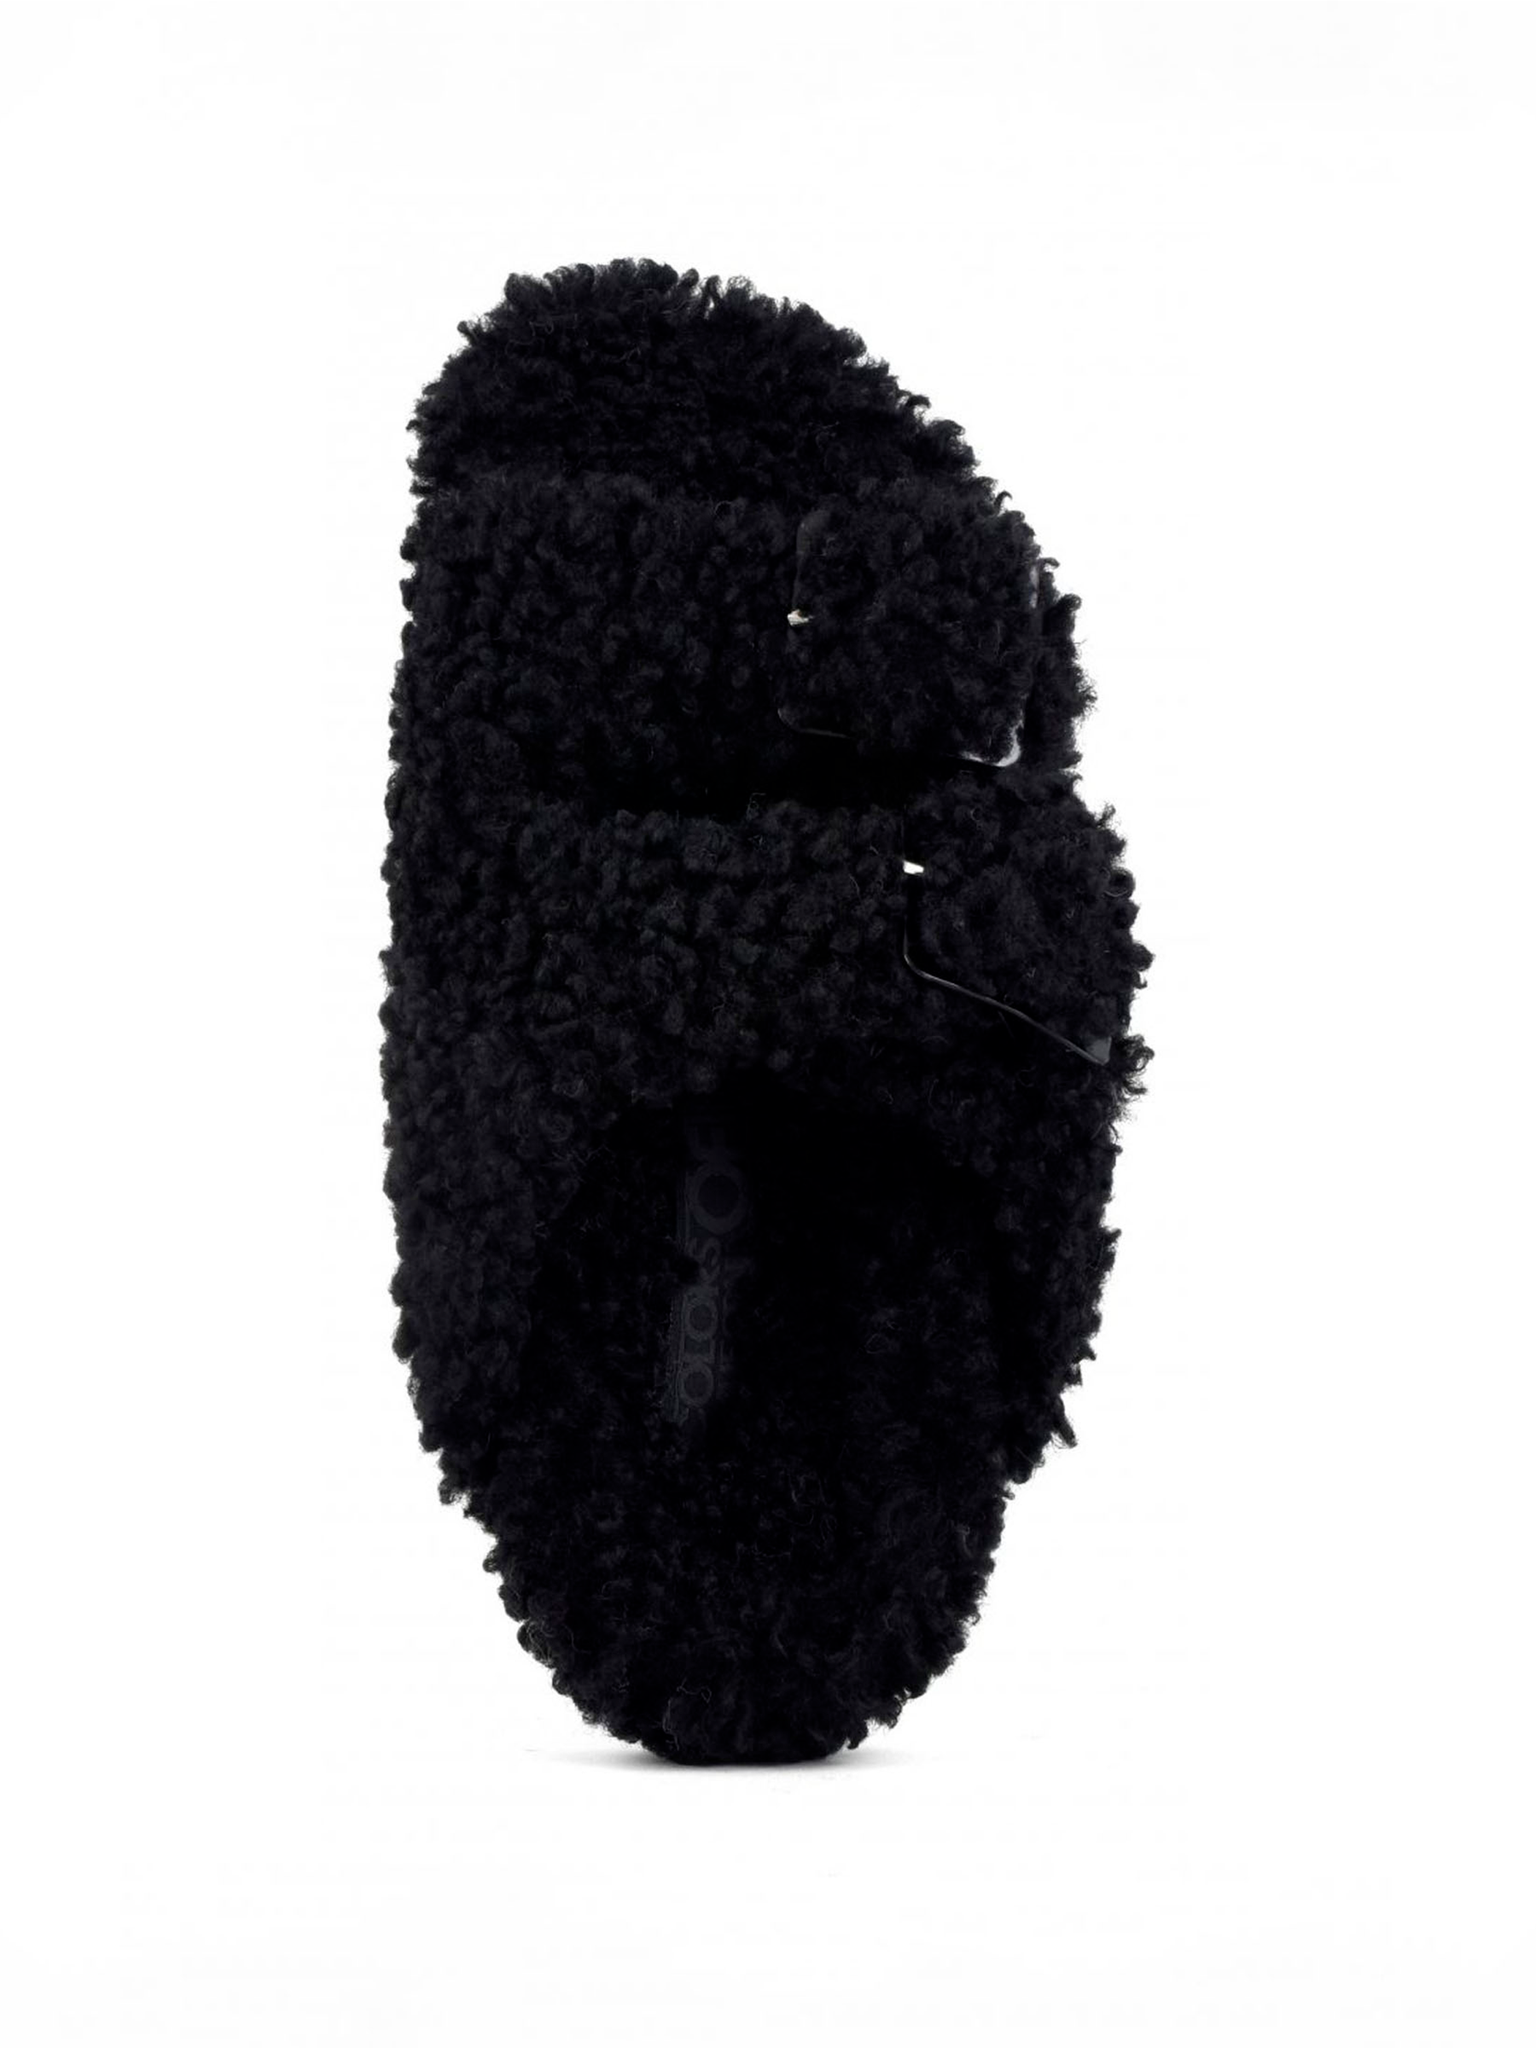 Furry slipper plastic buckle Black